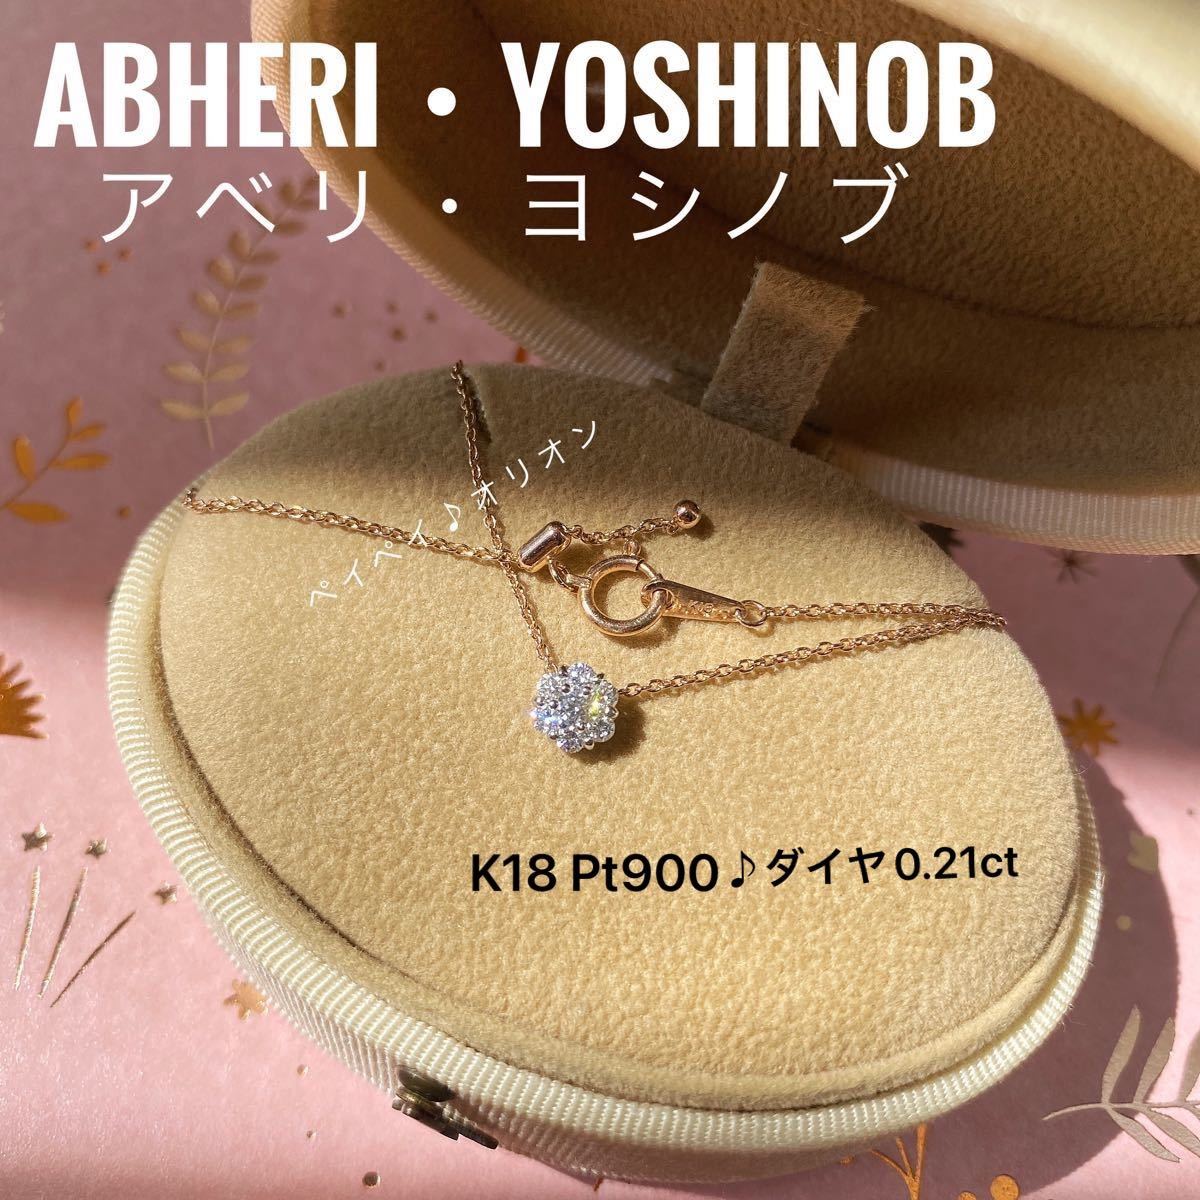 Abheri Yoshinob アベリ ヨシノブ フラワー K18 pt900 ダイヤモンド